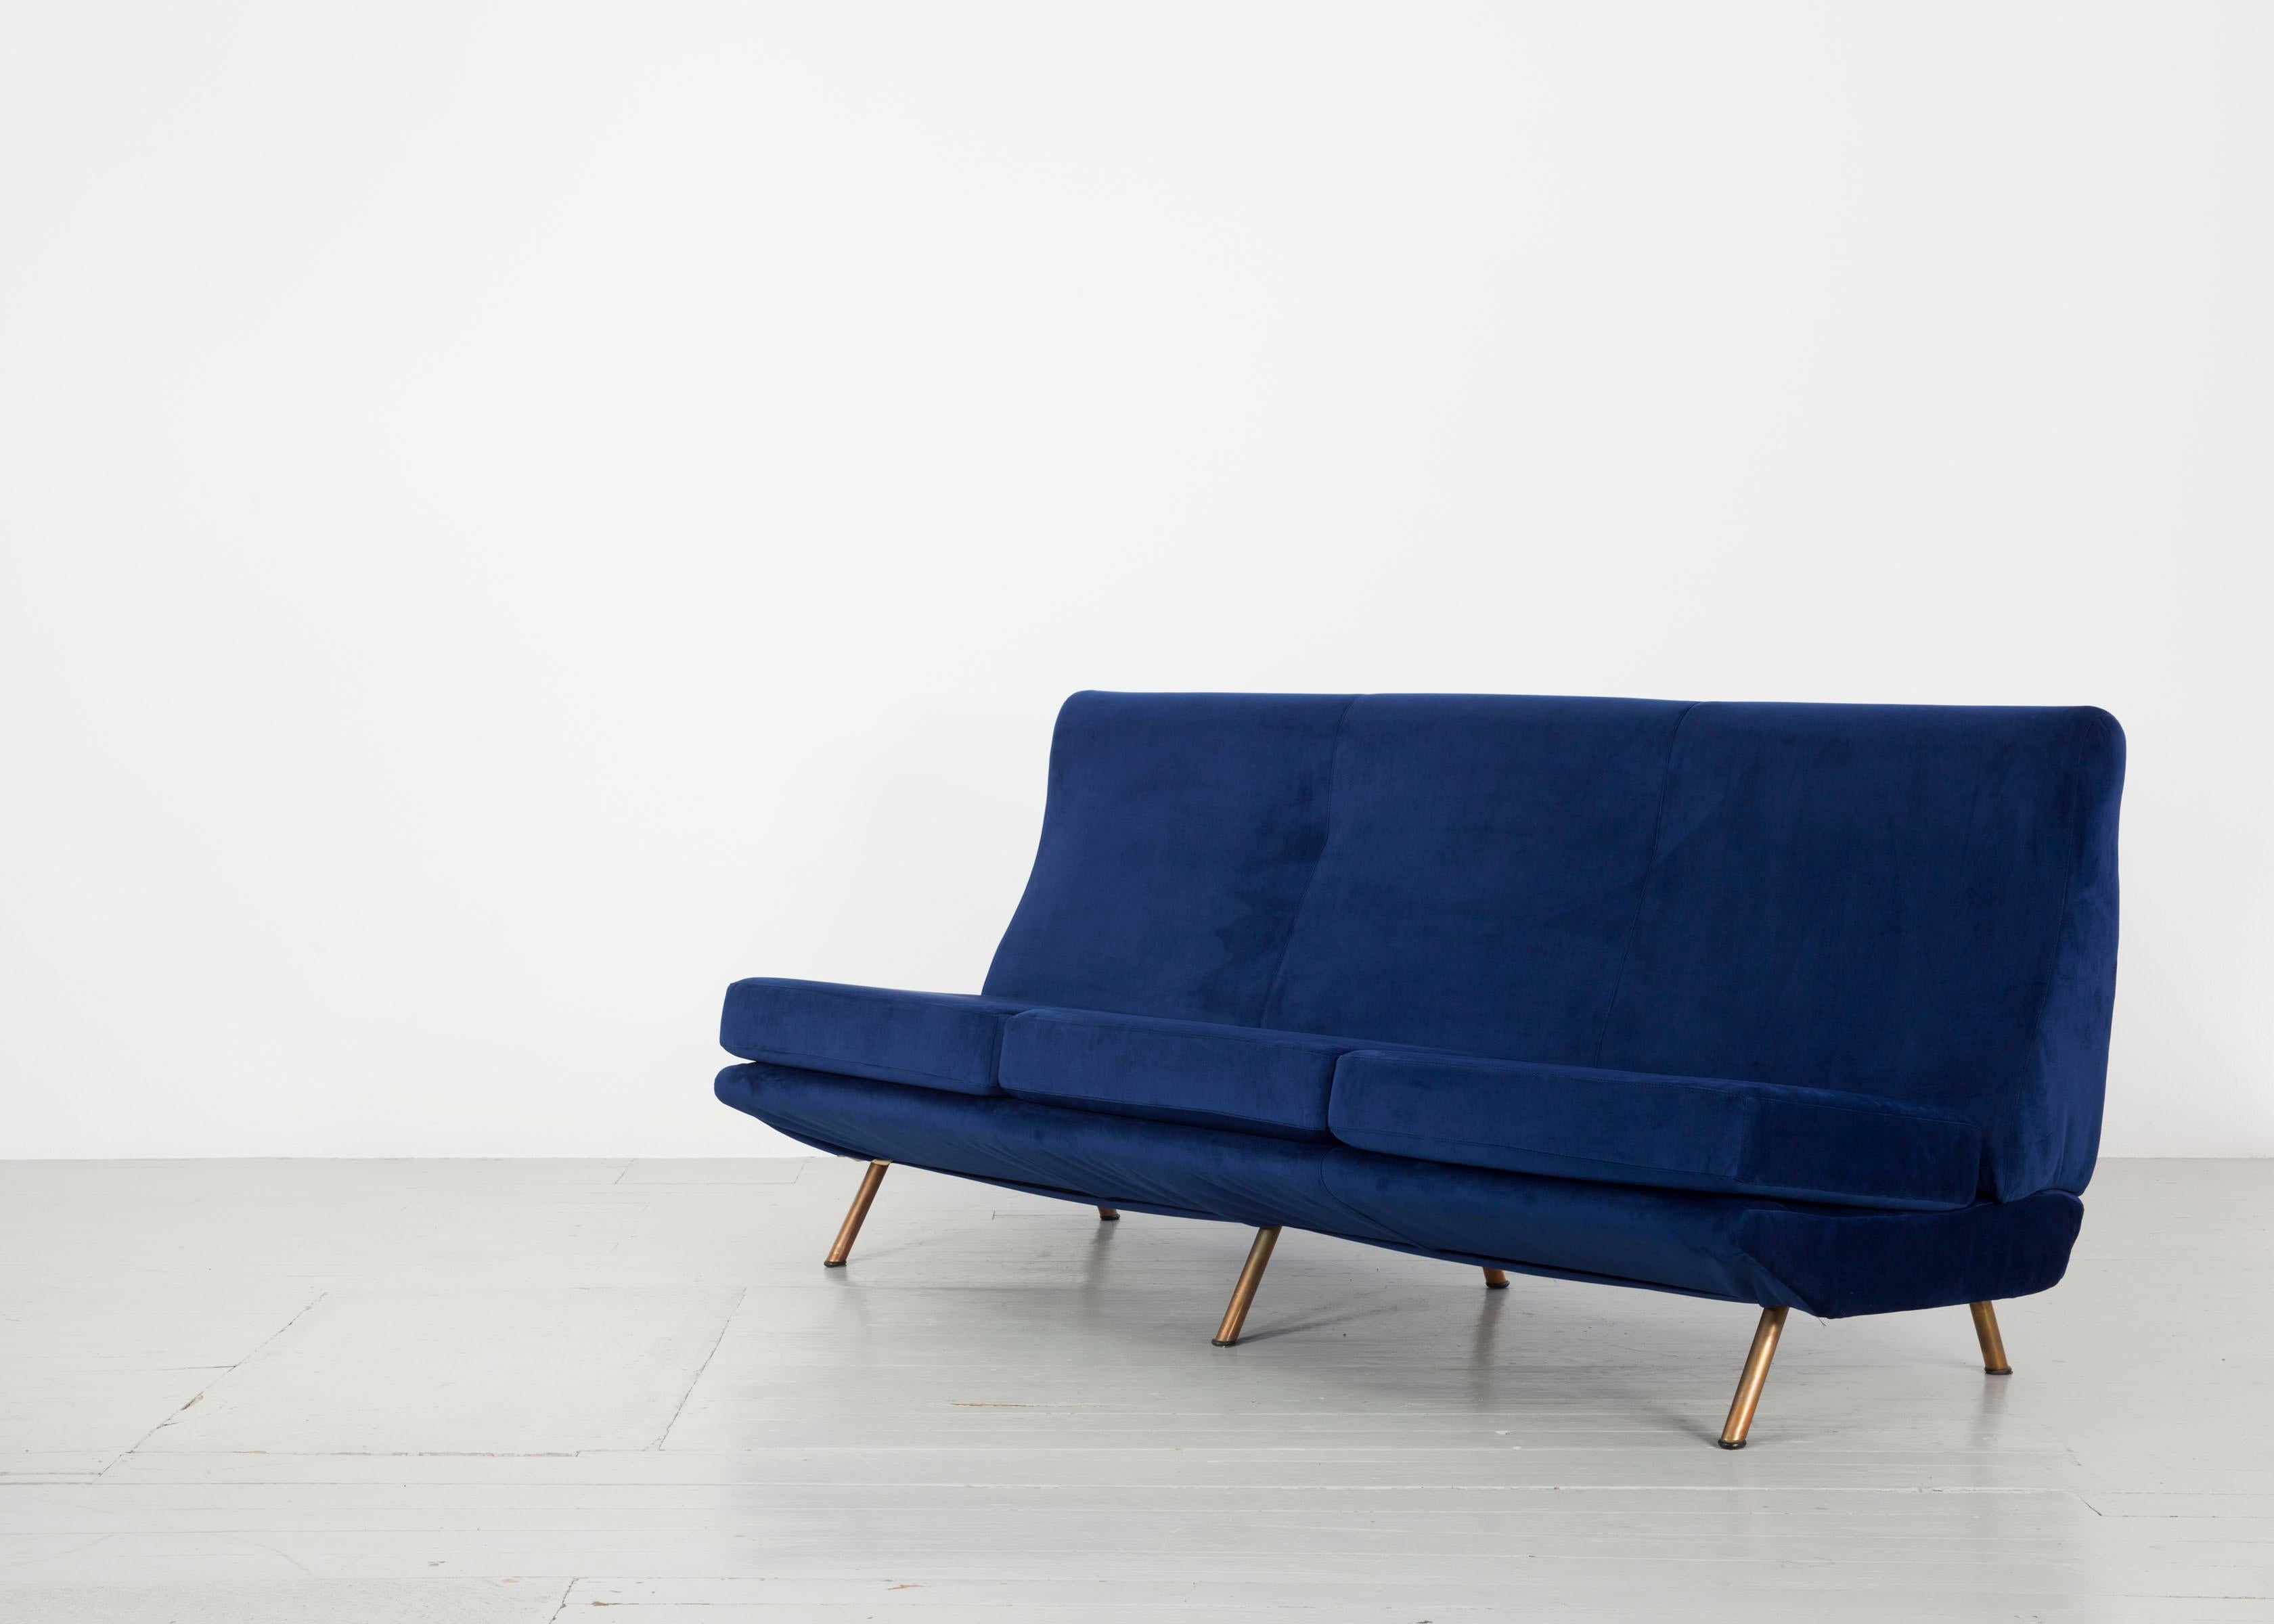 Velvet Deep Blue Three-Seat Sofa Model “Triennale”, Marco Zanuso, Arflex, 1956 For Sale 2